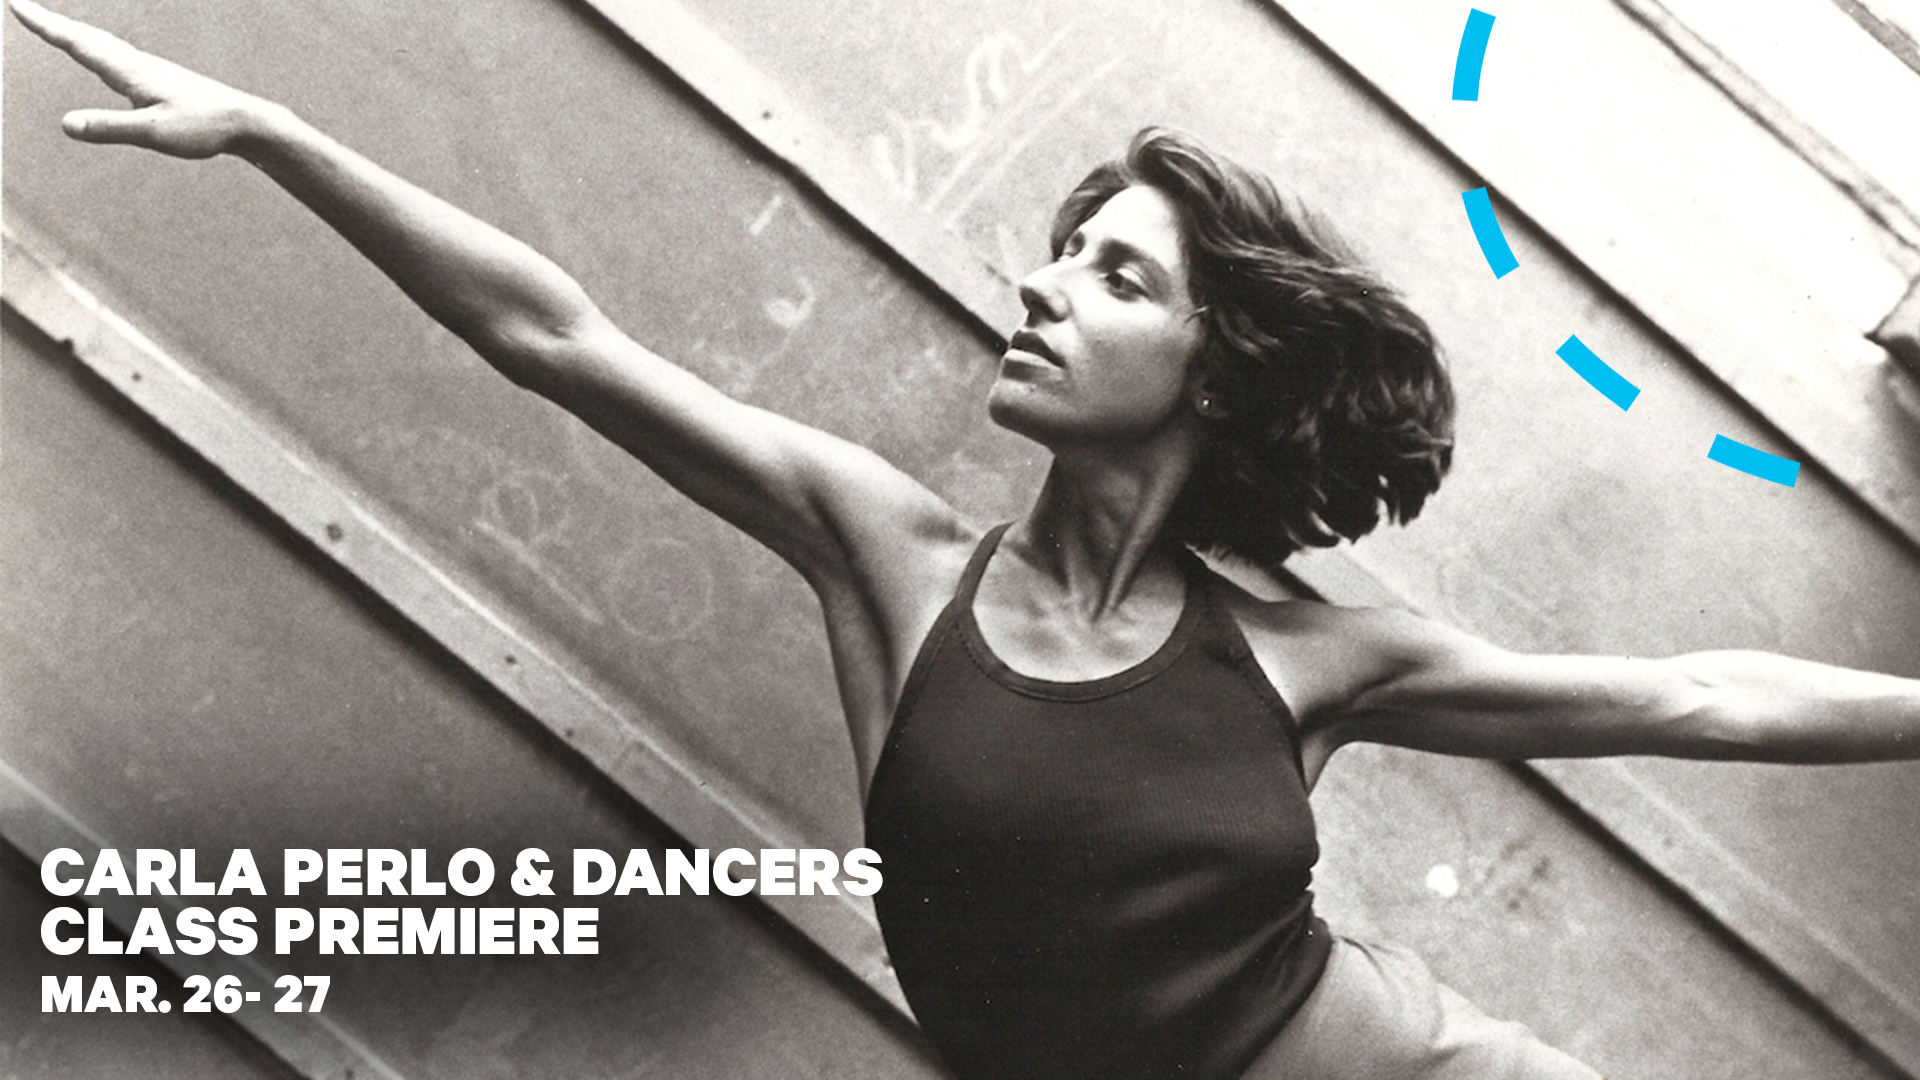 Carla Perlo & Dancers